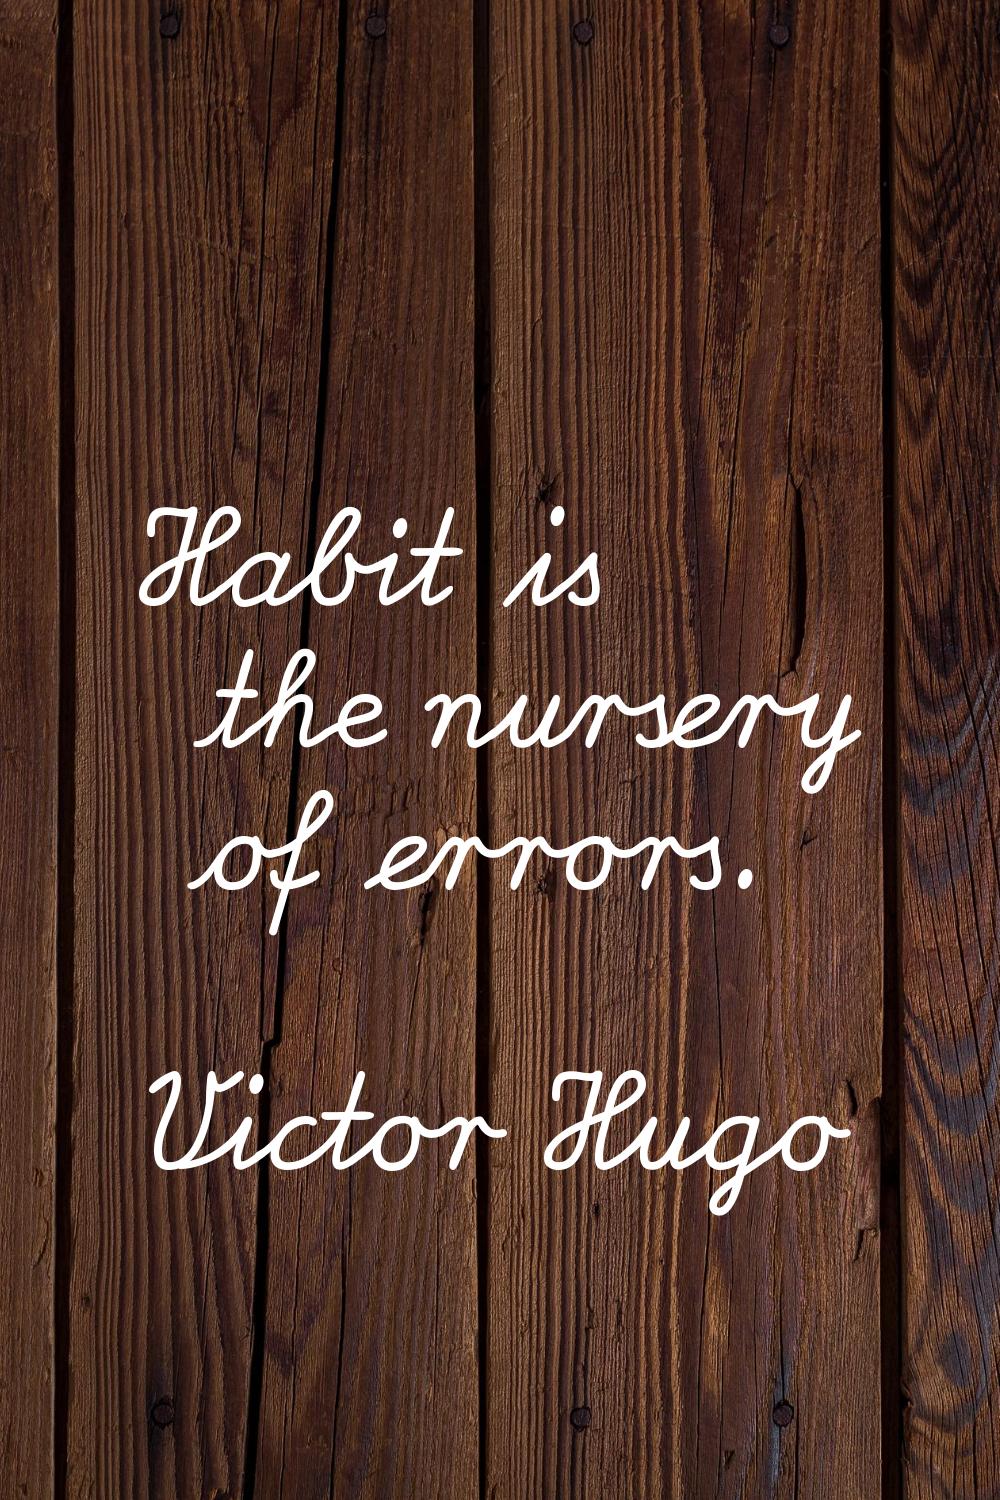 Habit is the nursery of errors.